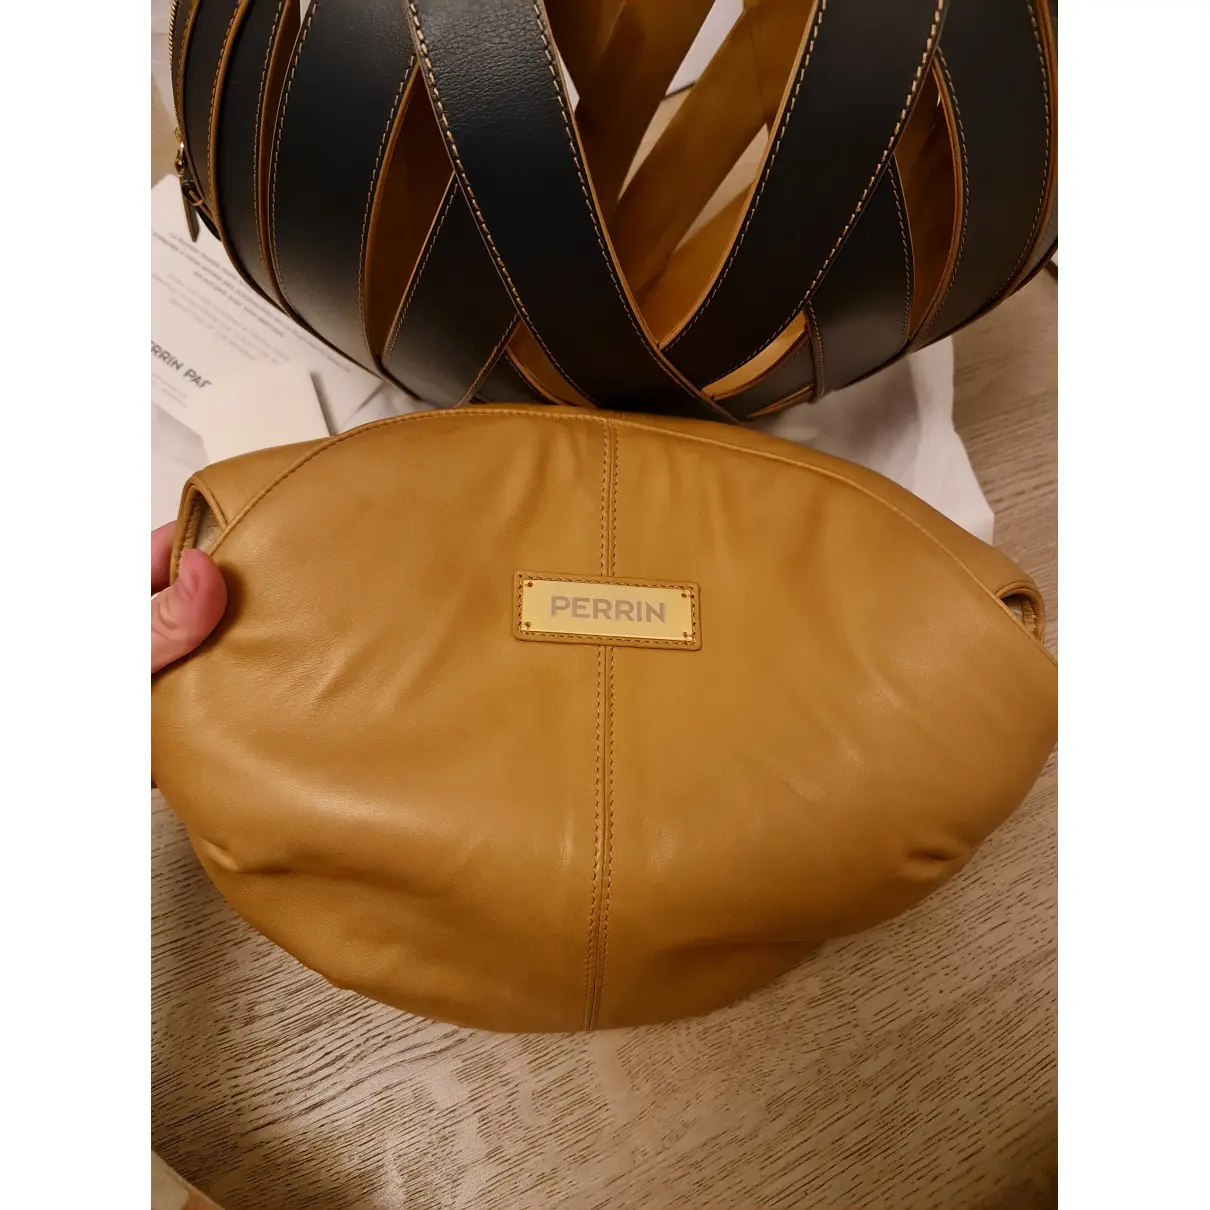 Luxury Perrin Paris Handbags Women